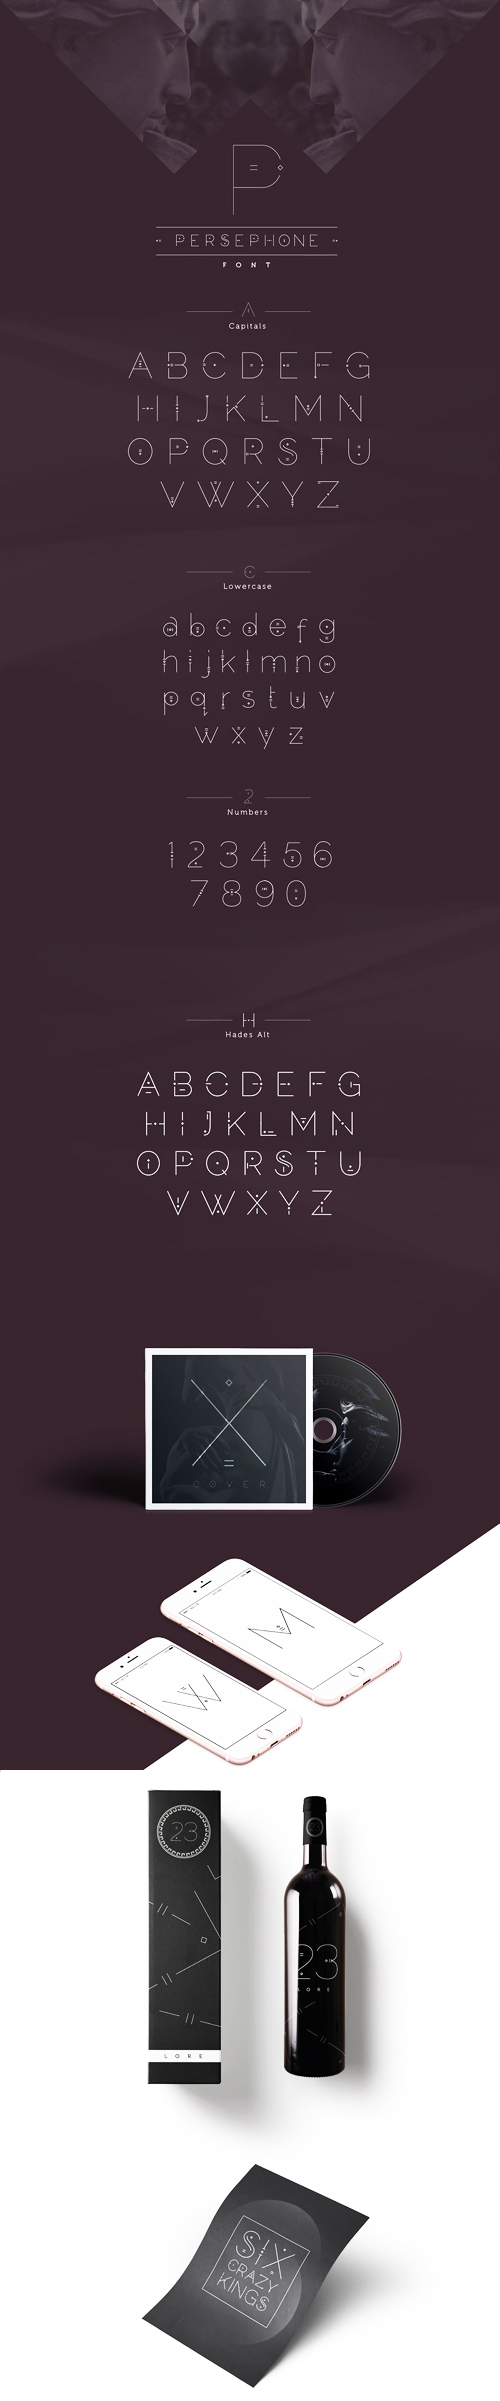 Persephone Geometric Sans Serif Typeface